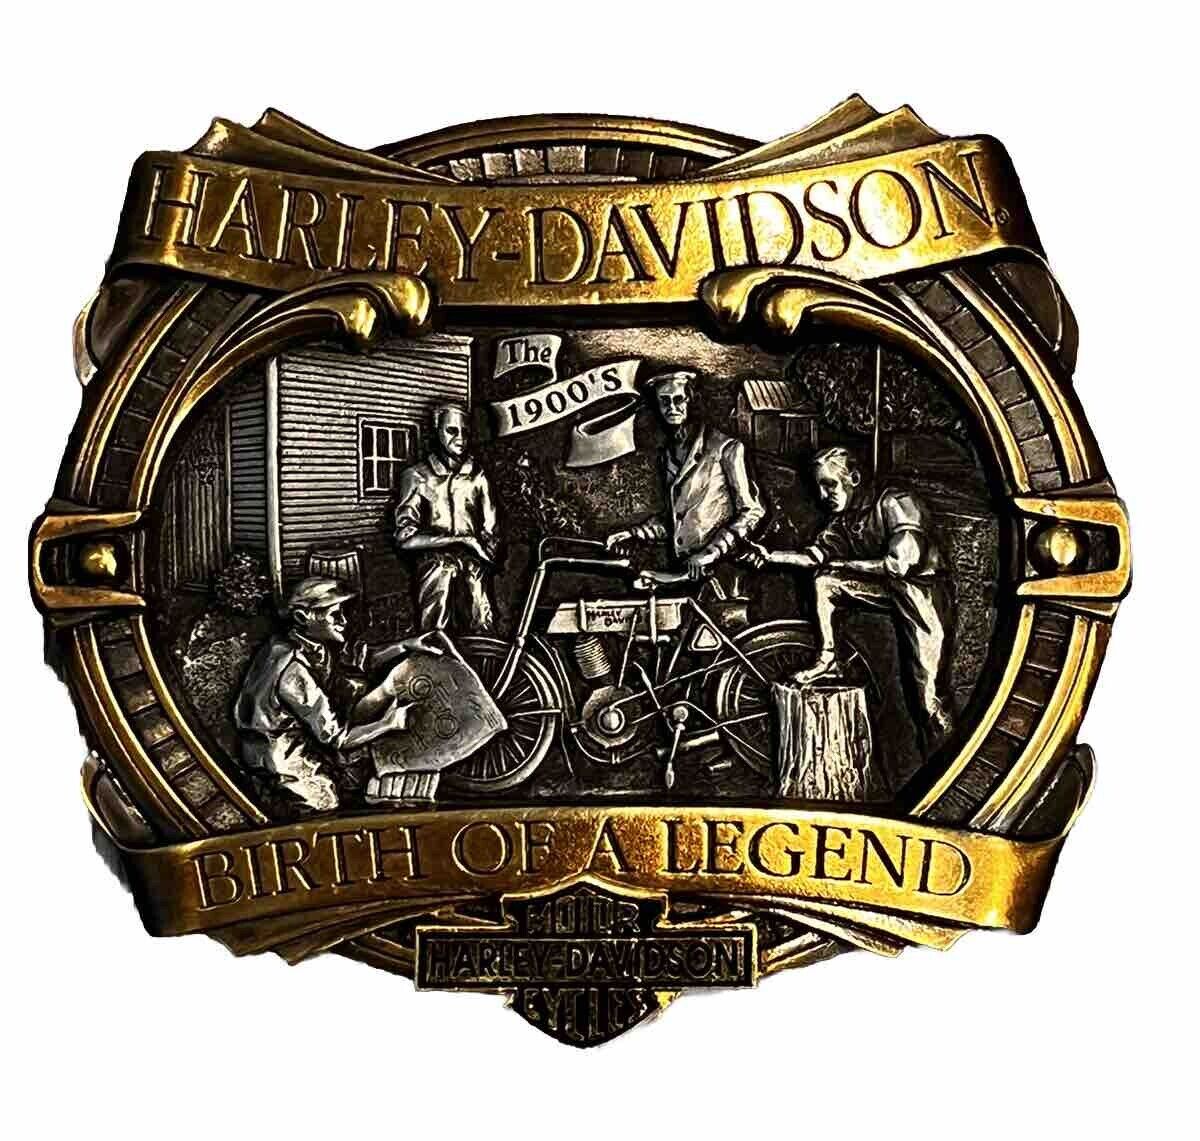 Harley Davidson Decade Birth of a Legend Belt Buckle Ltd Ed /7500 Made in USA